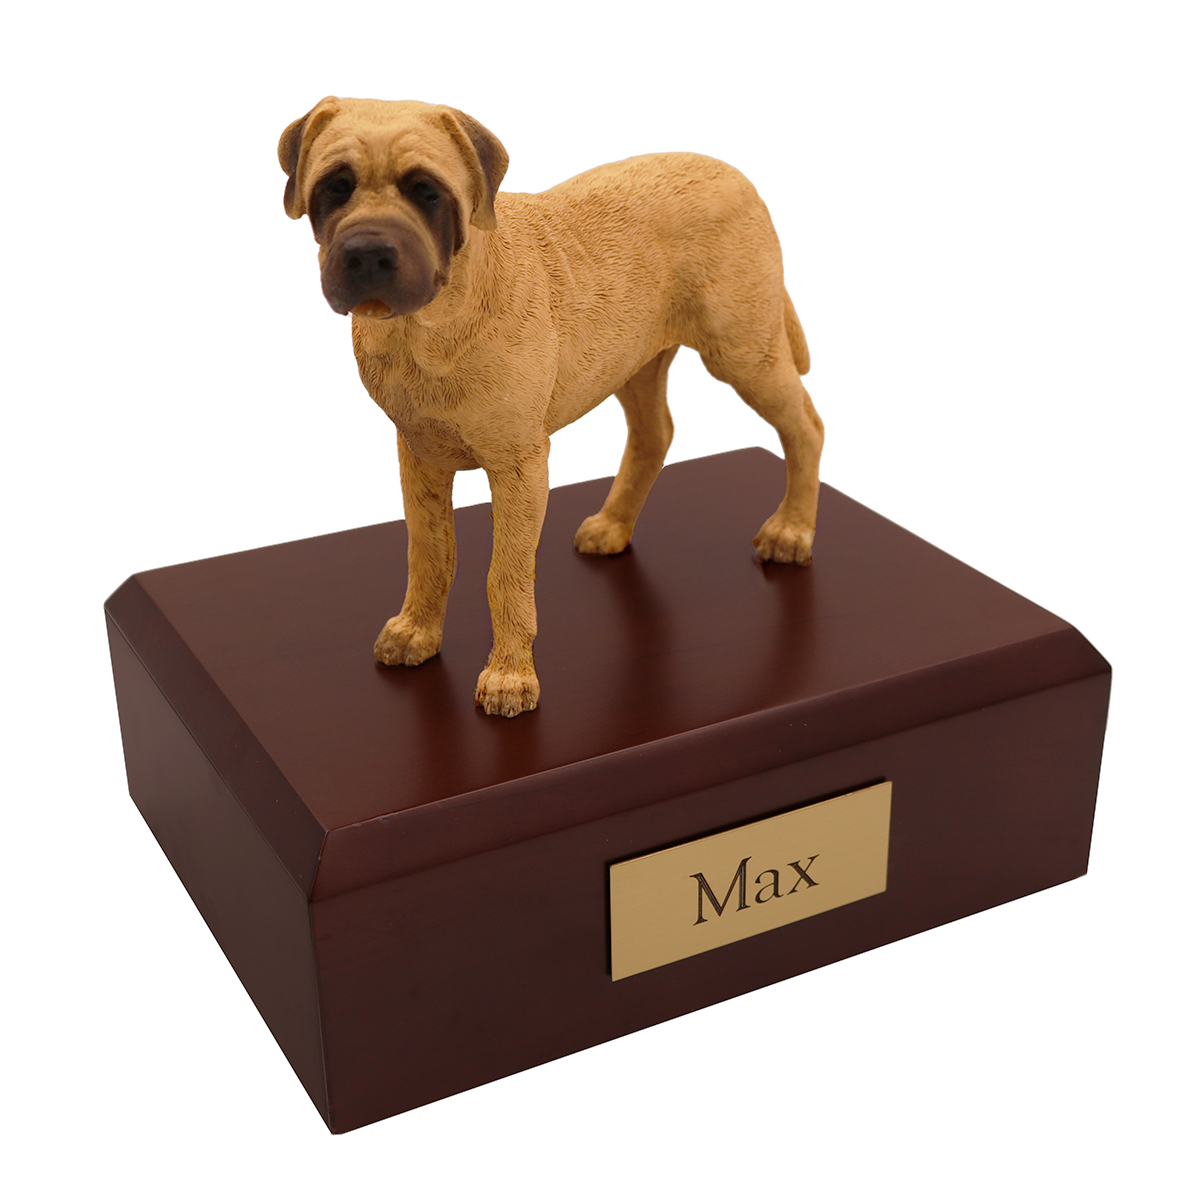 Dog, Bull Mastiff - Figurine Urn